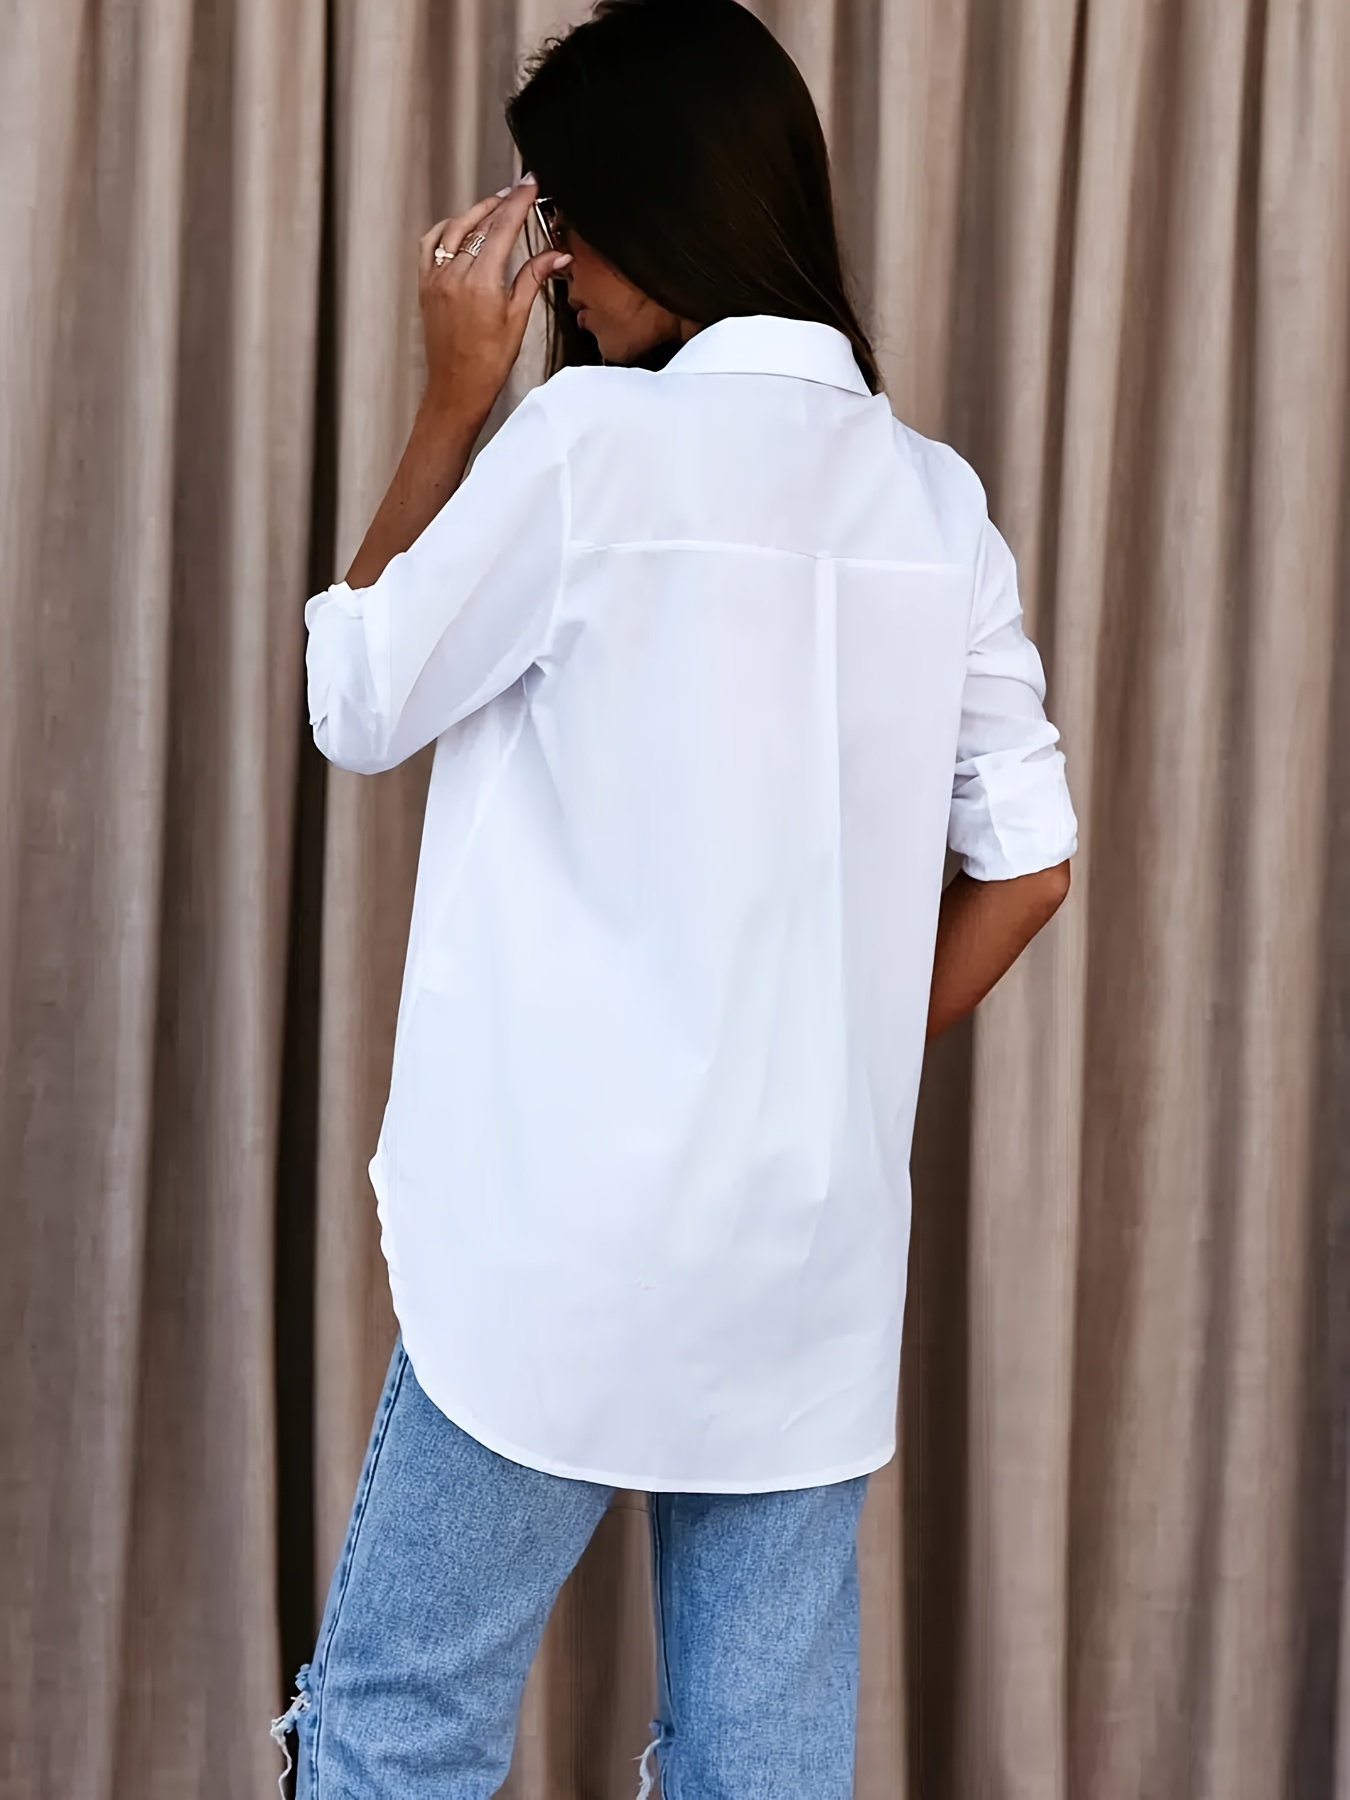 SUNSIOM Women's Long Sleeve Tops Blouse V Neck Button Down Shirts